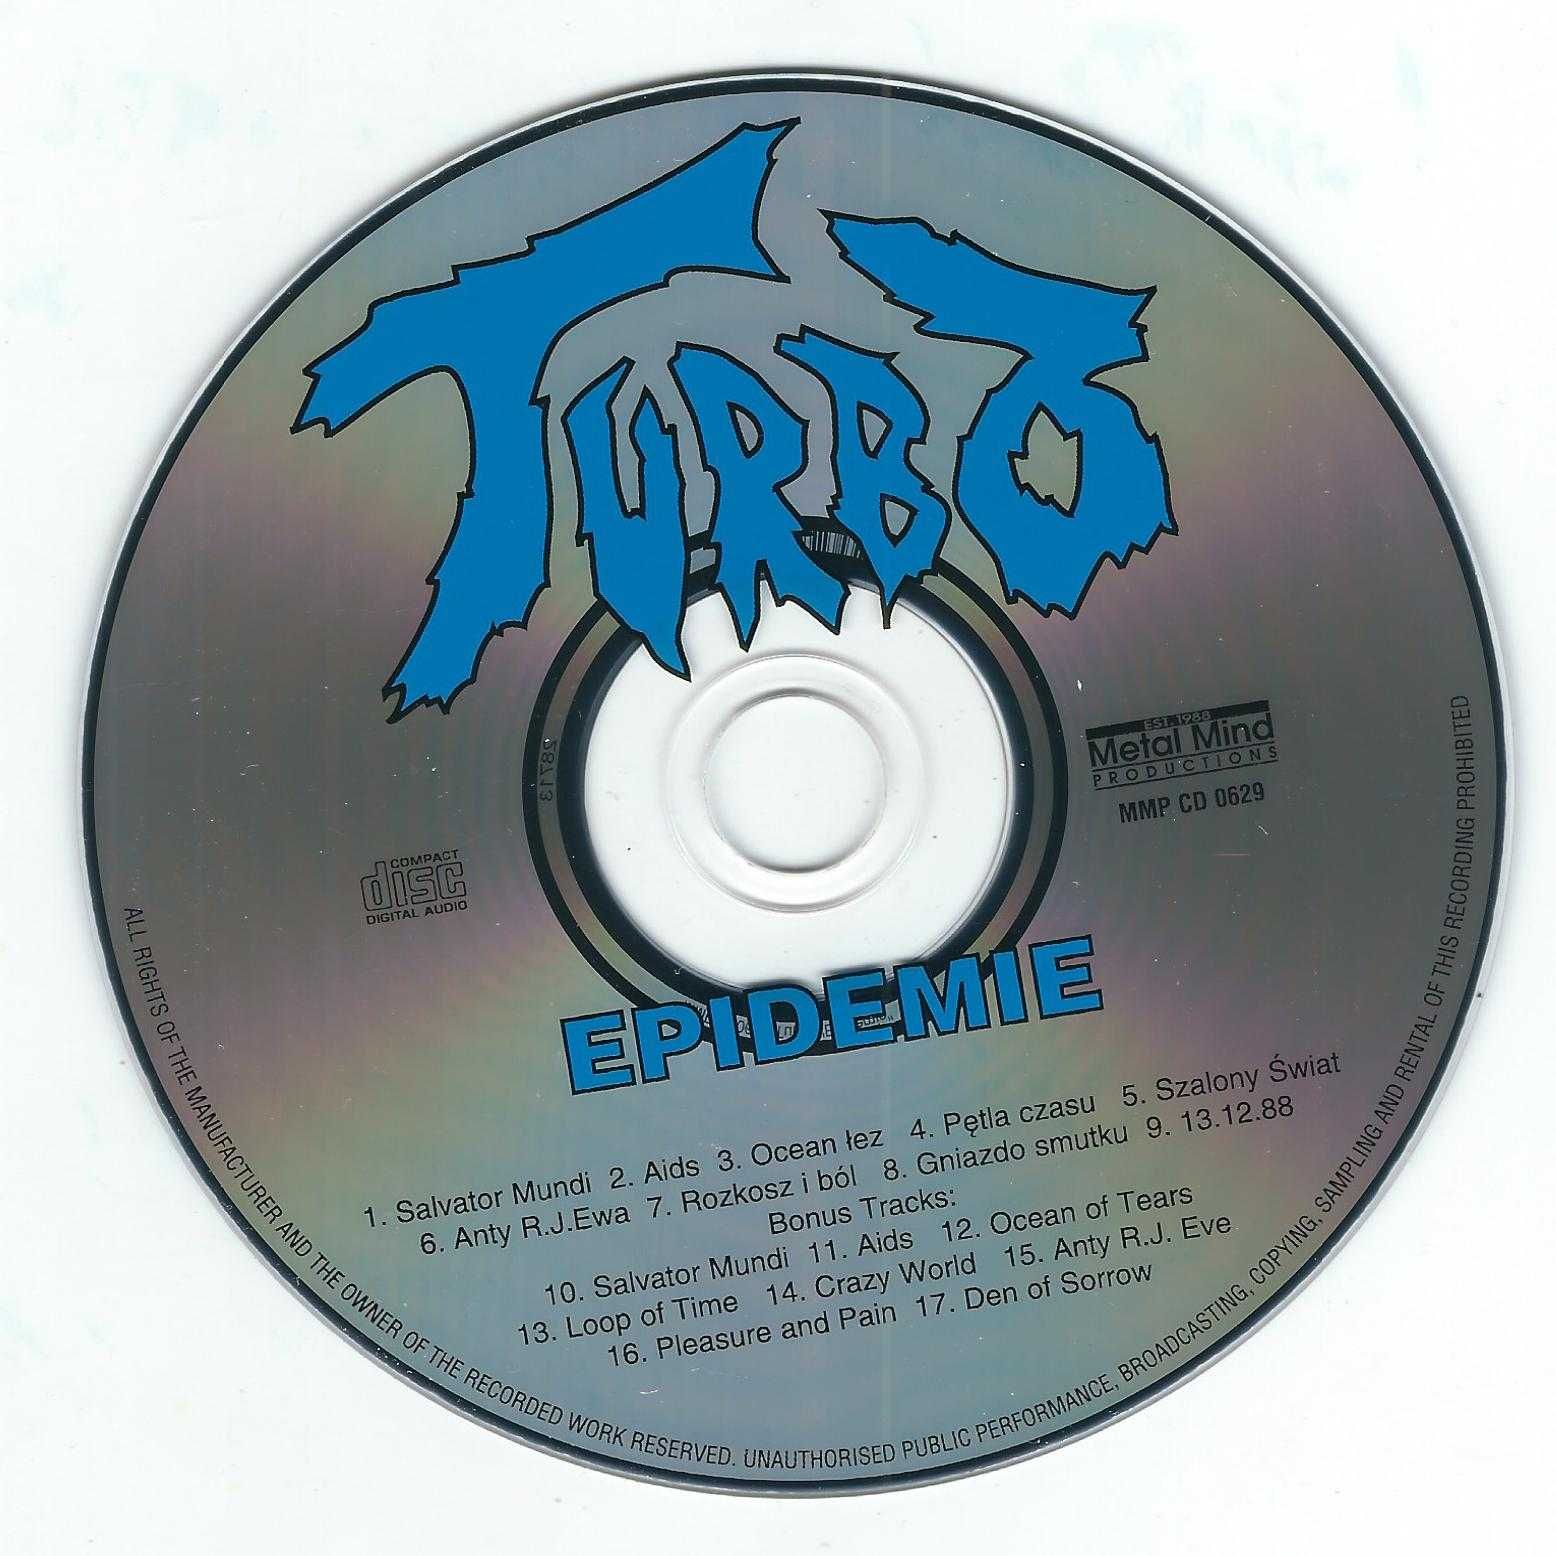 CD Turbo - Epidemie (2020) (Metal Mind Productions)